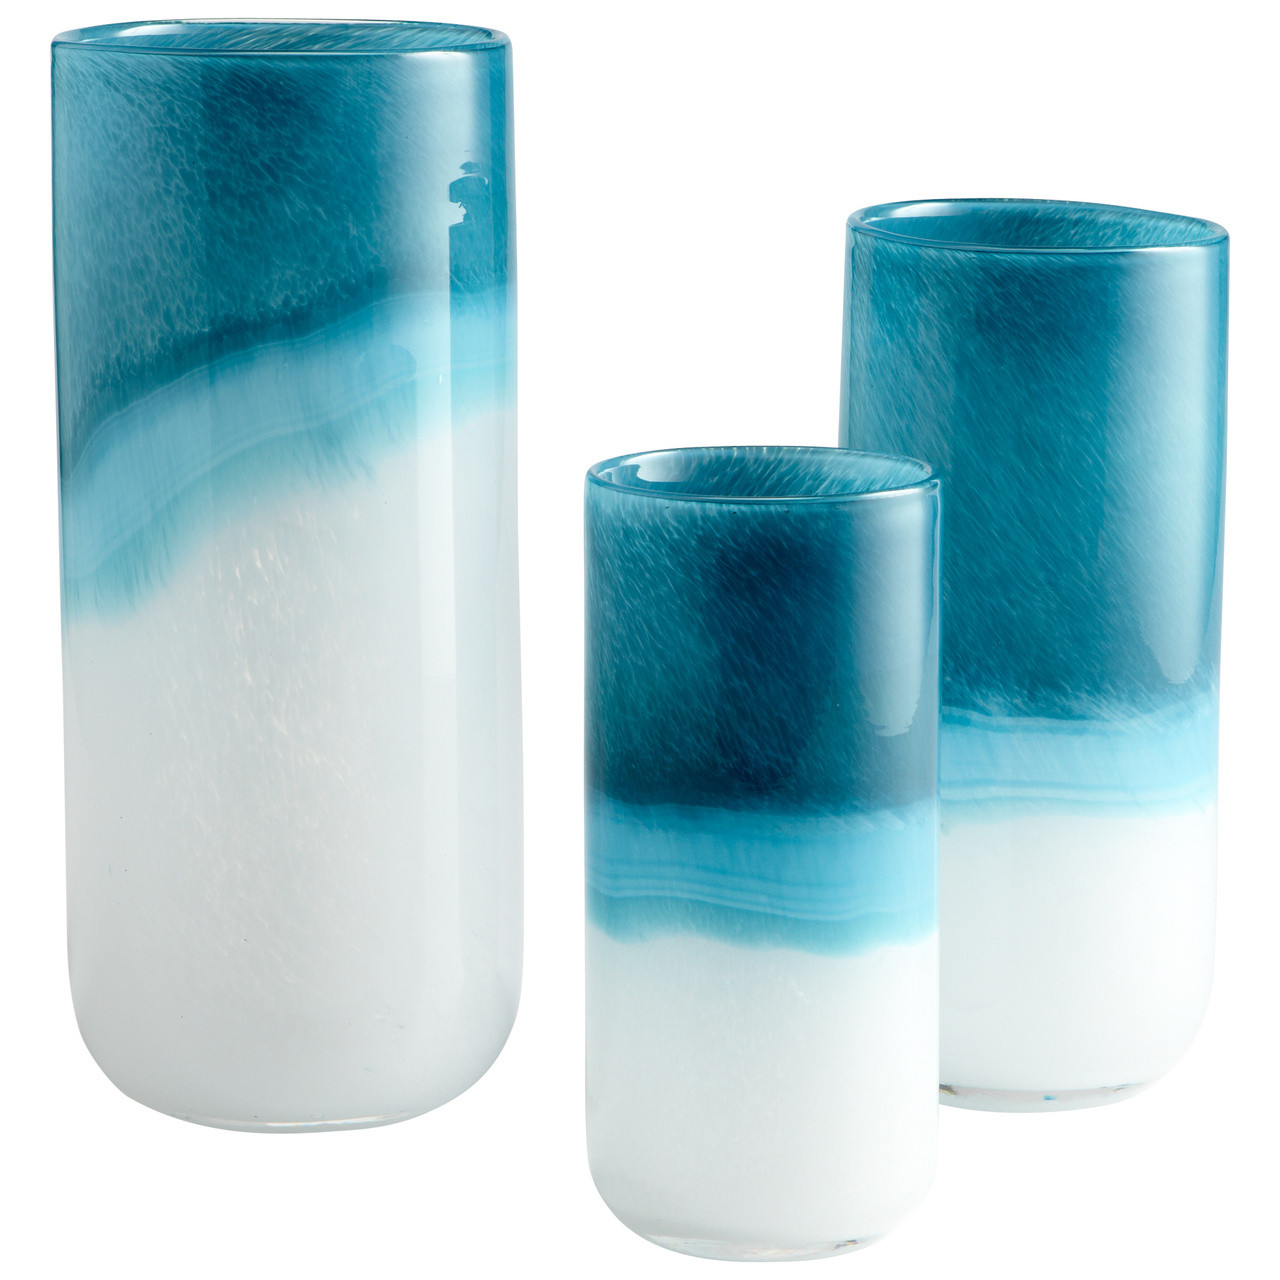 CYAN DESIGN 05876 Medium Turquoise Cloud Vase, Blue and White